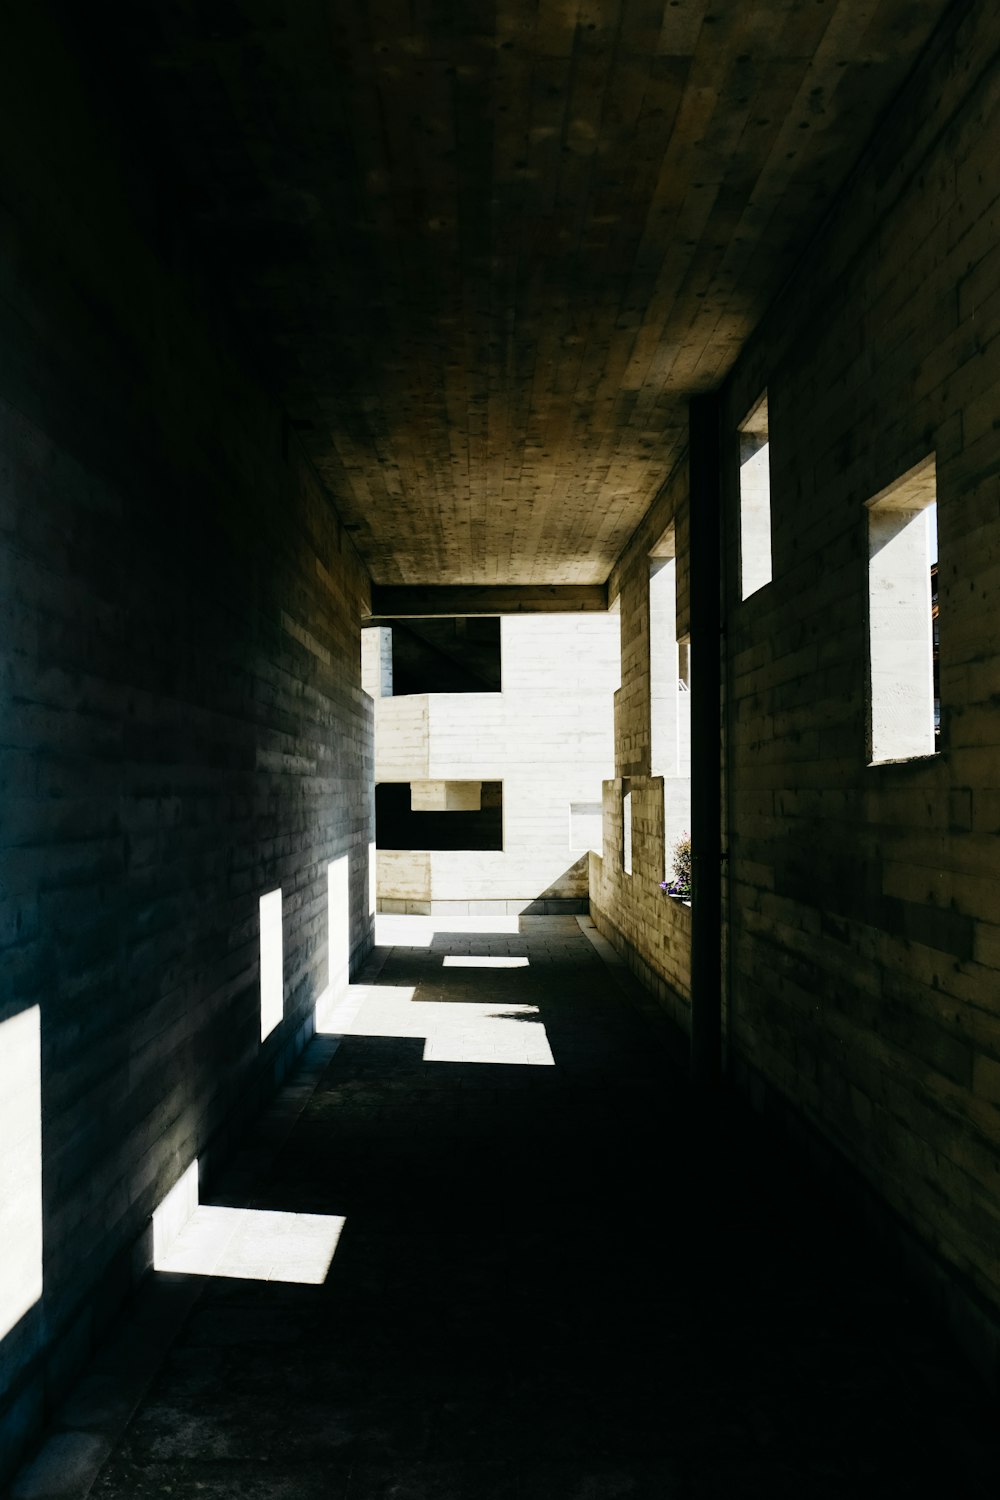 a long dark hallway with light coming through the windows